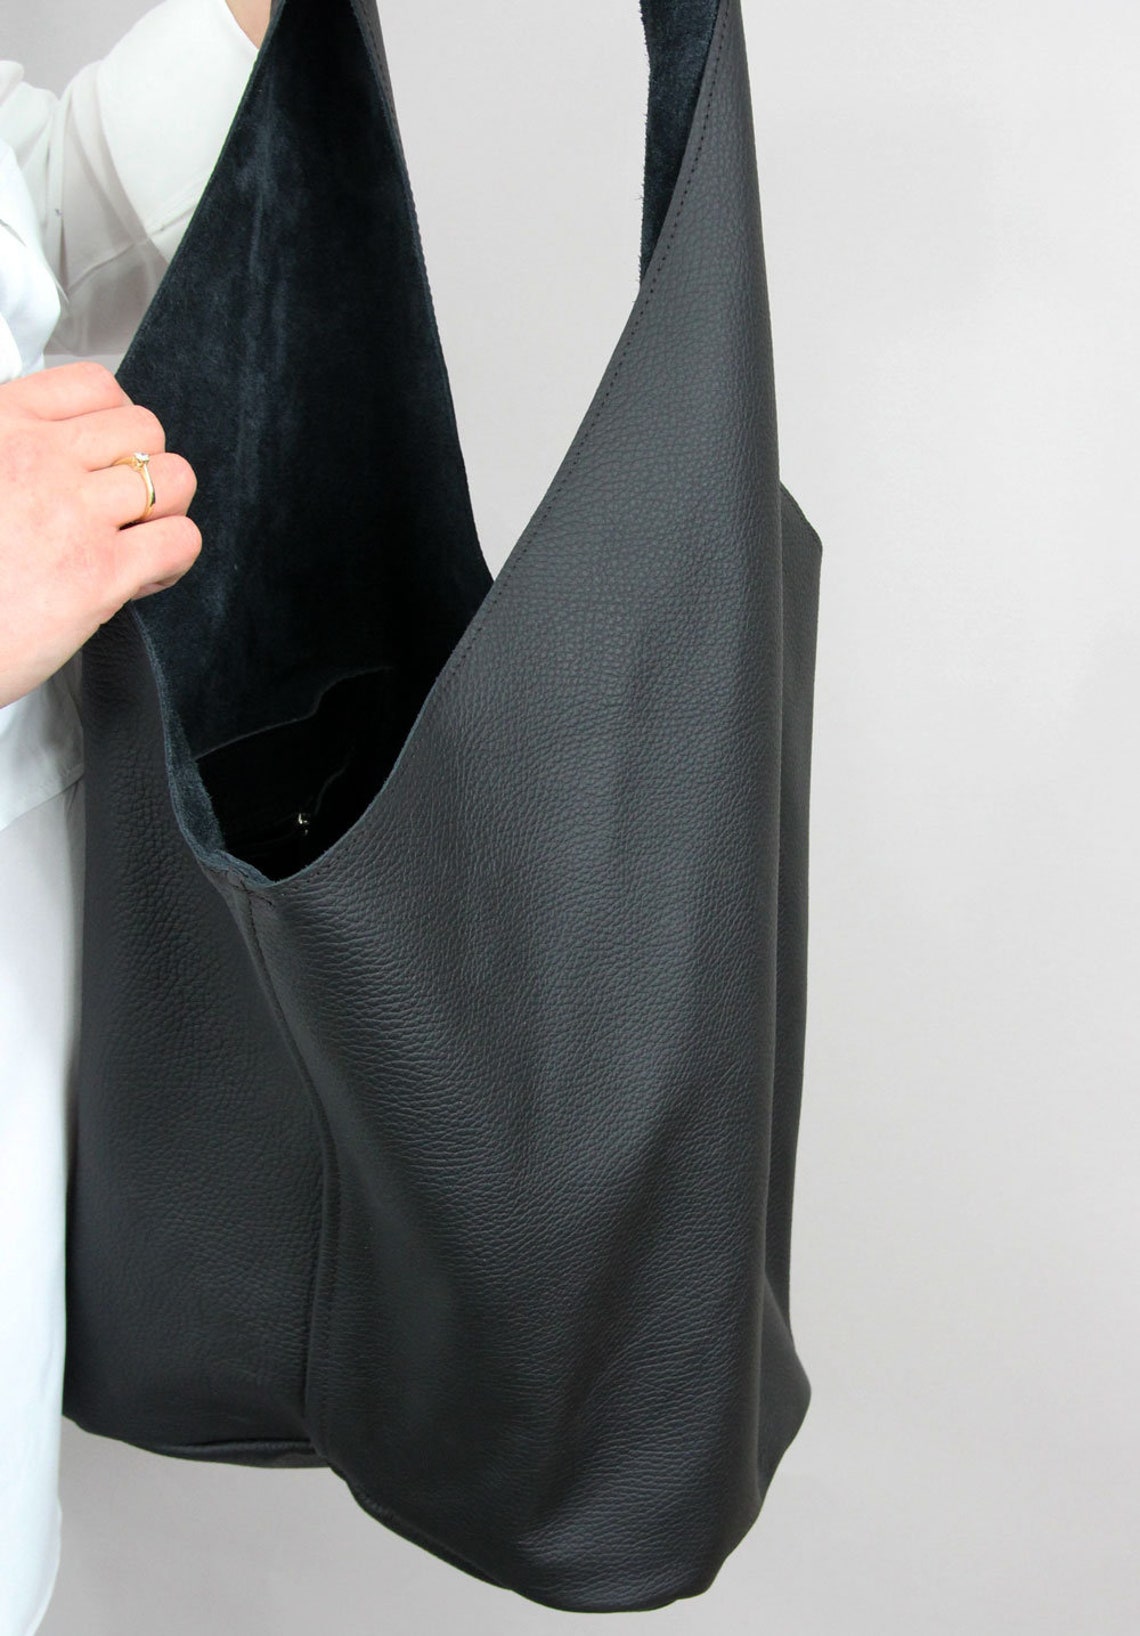 Black leather hippie bag Bag shoulder and cross body Hobo | Etsy